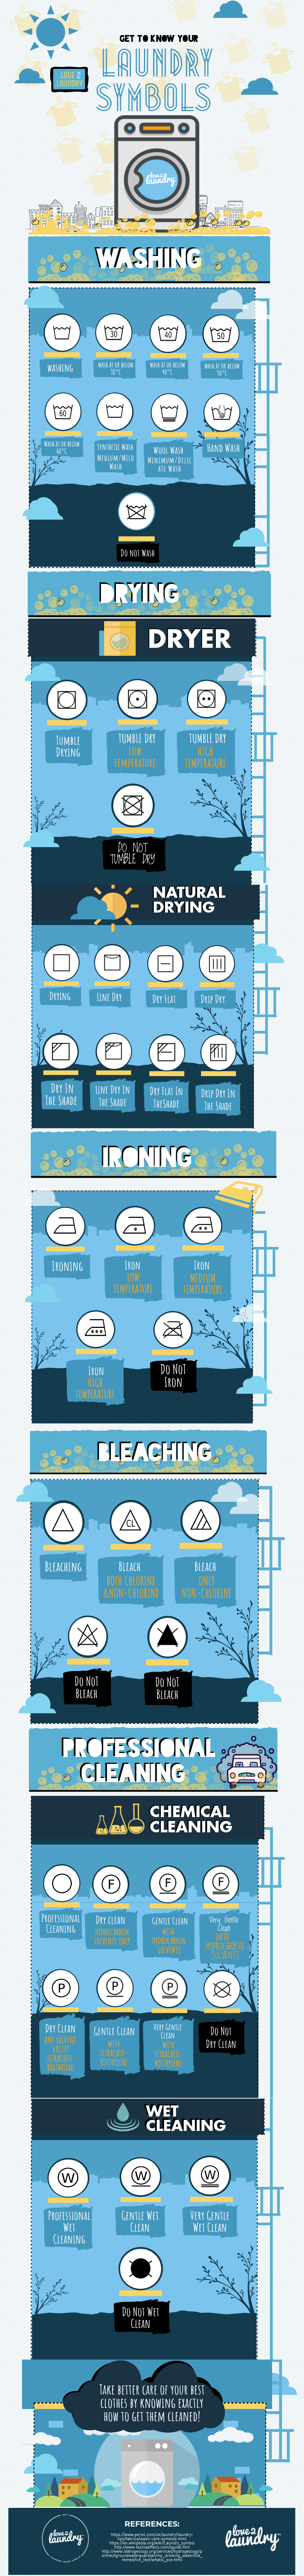 Laundr-symbols-infographic